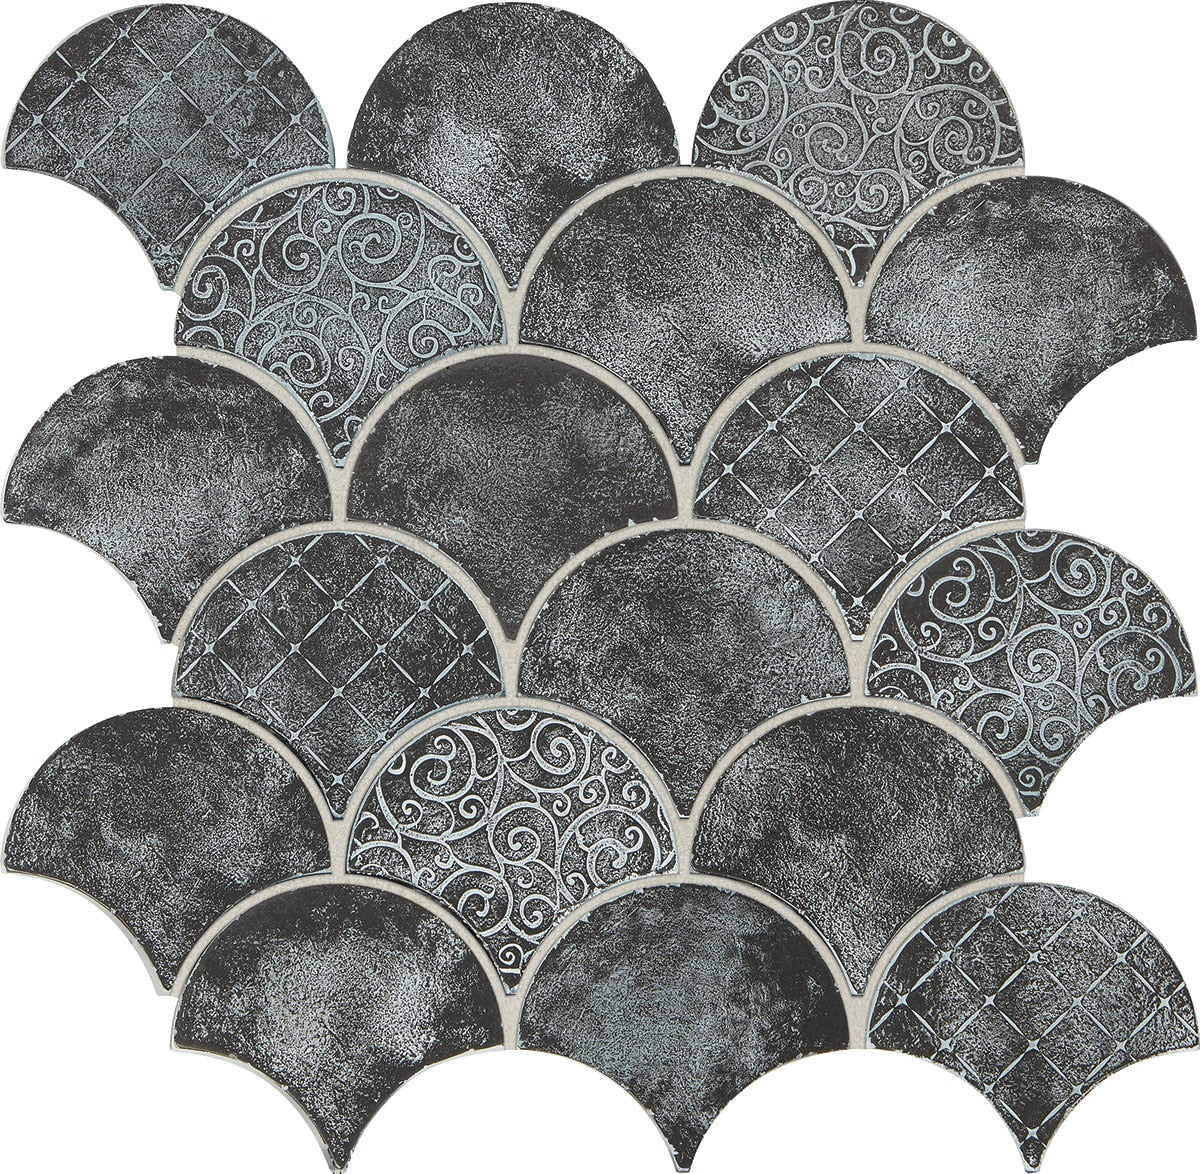 Daltile Vintage Metals Wall Tile (4x4 & 2 Mosaic Patterns)